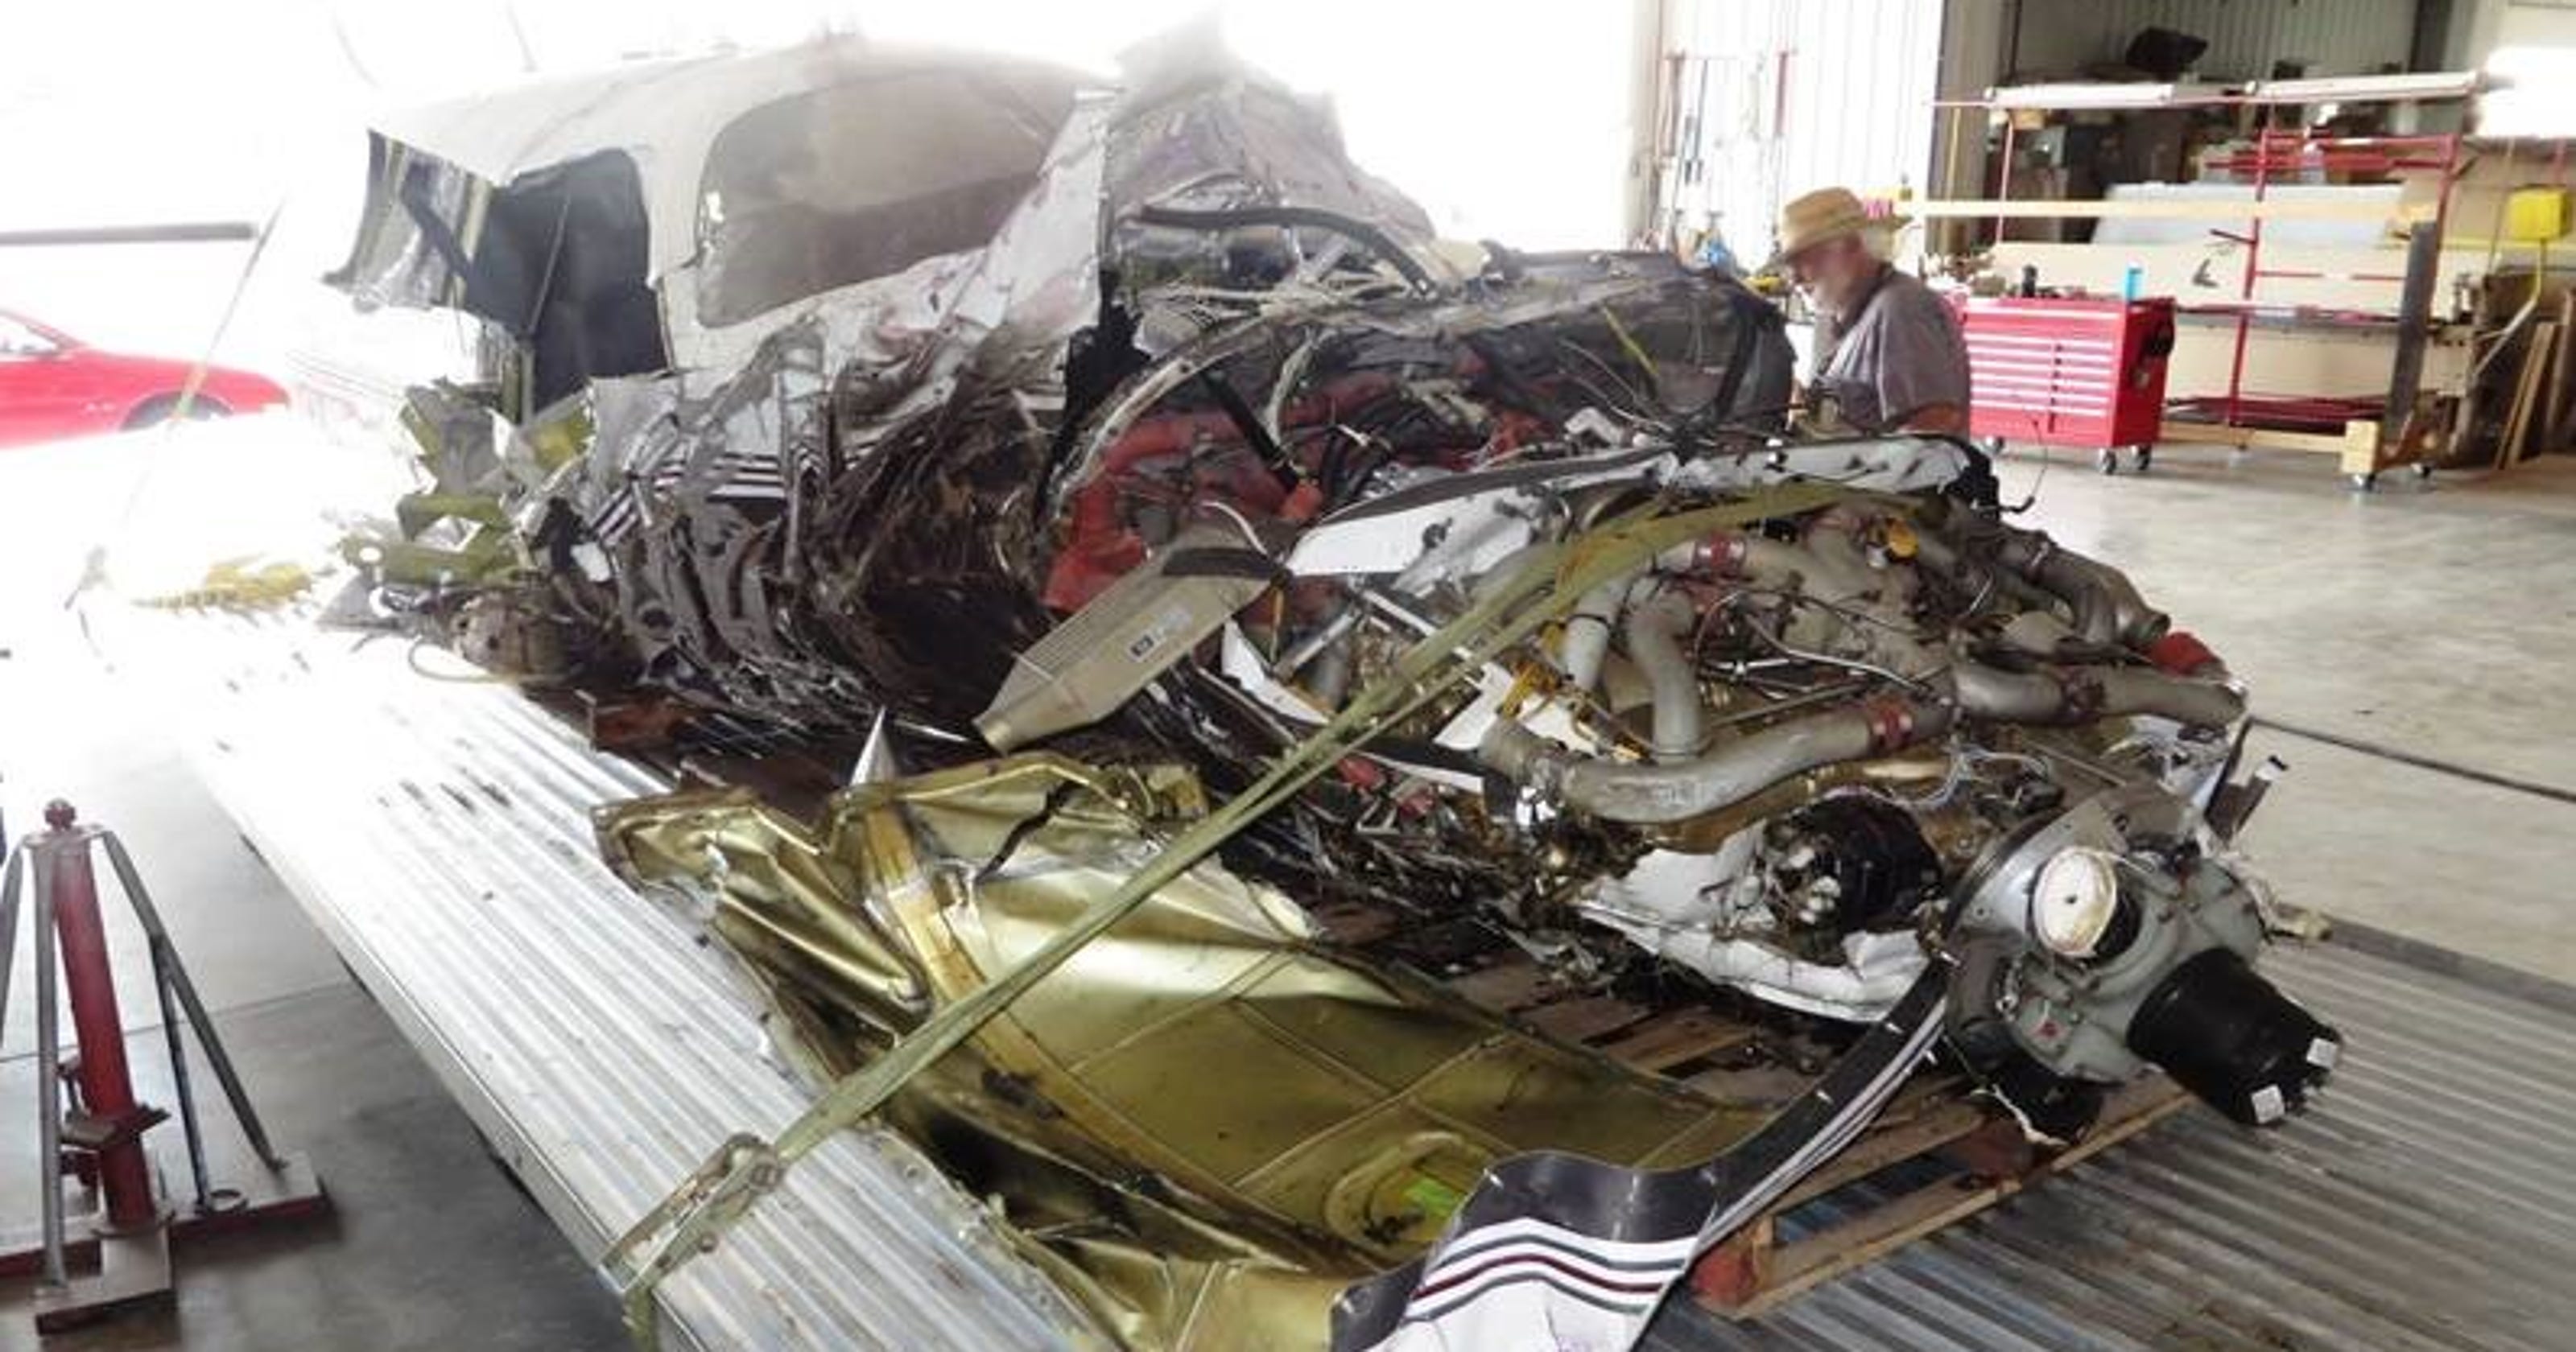 Photos show damage from plane crash at EAA